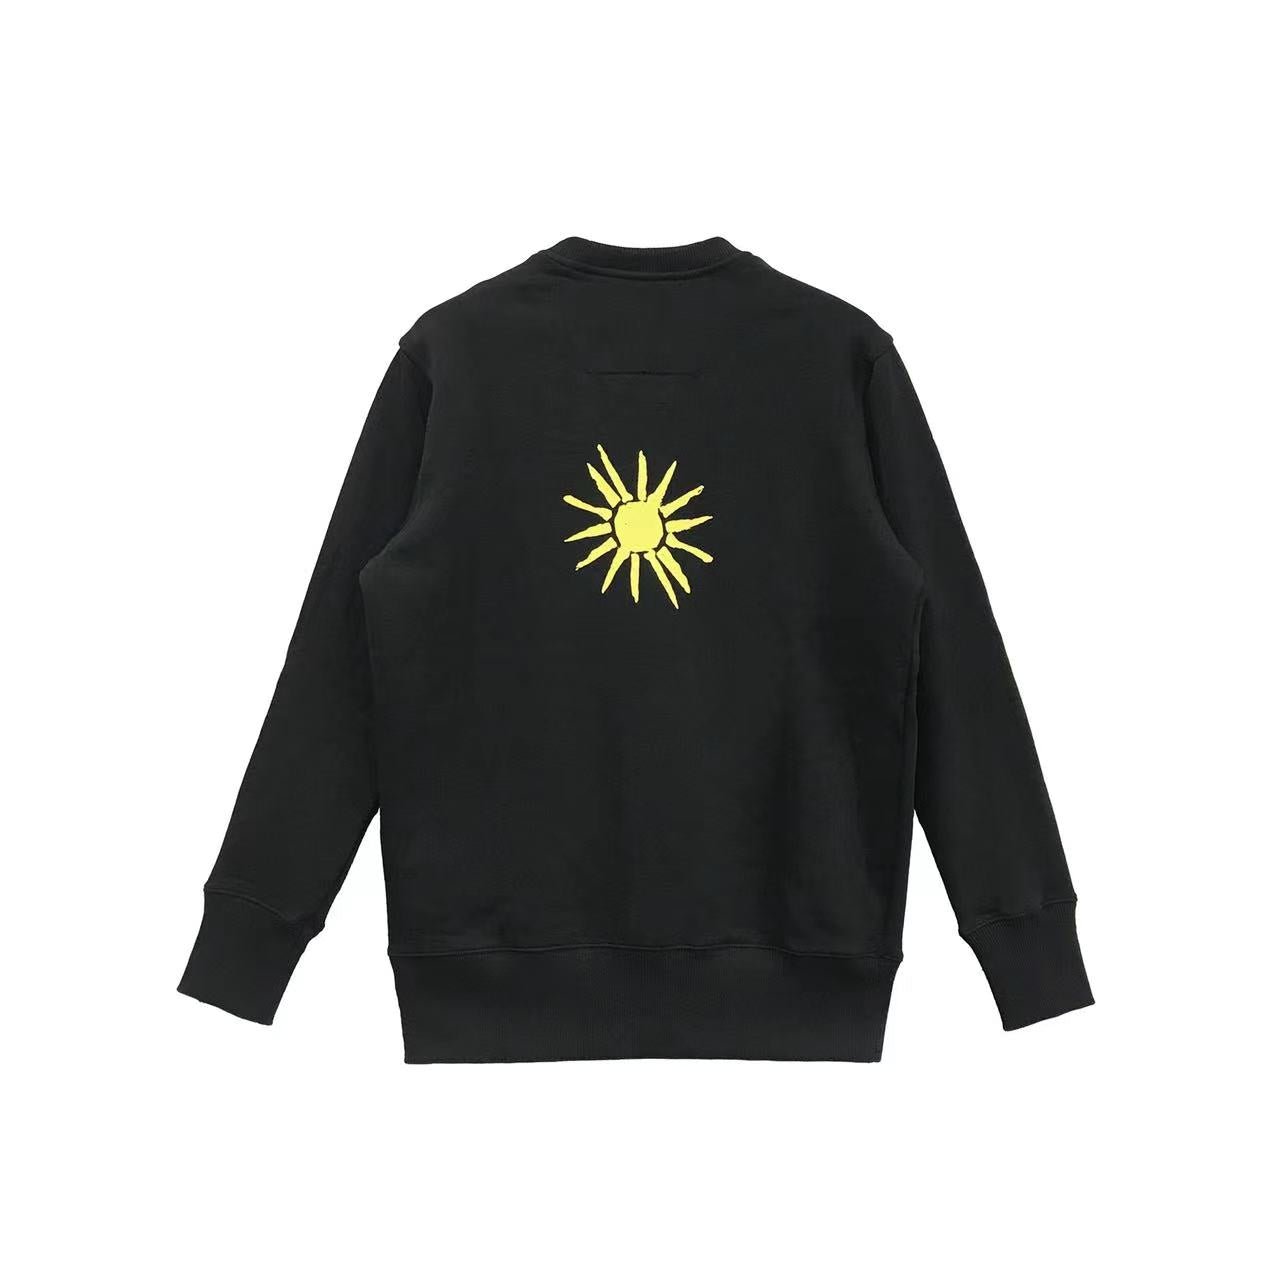 Givenchy Logo Print Sweatshirt - SHENGLI ROAD MARKET